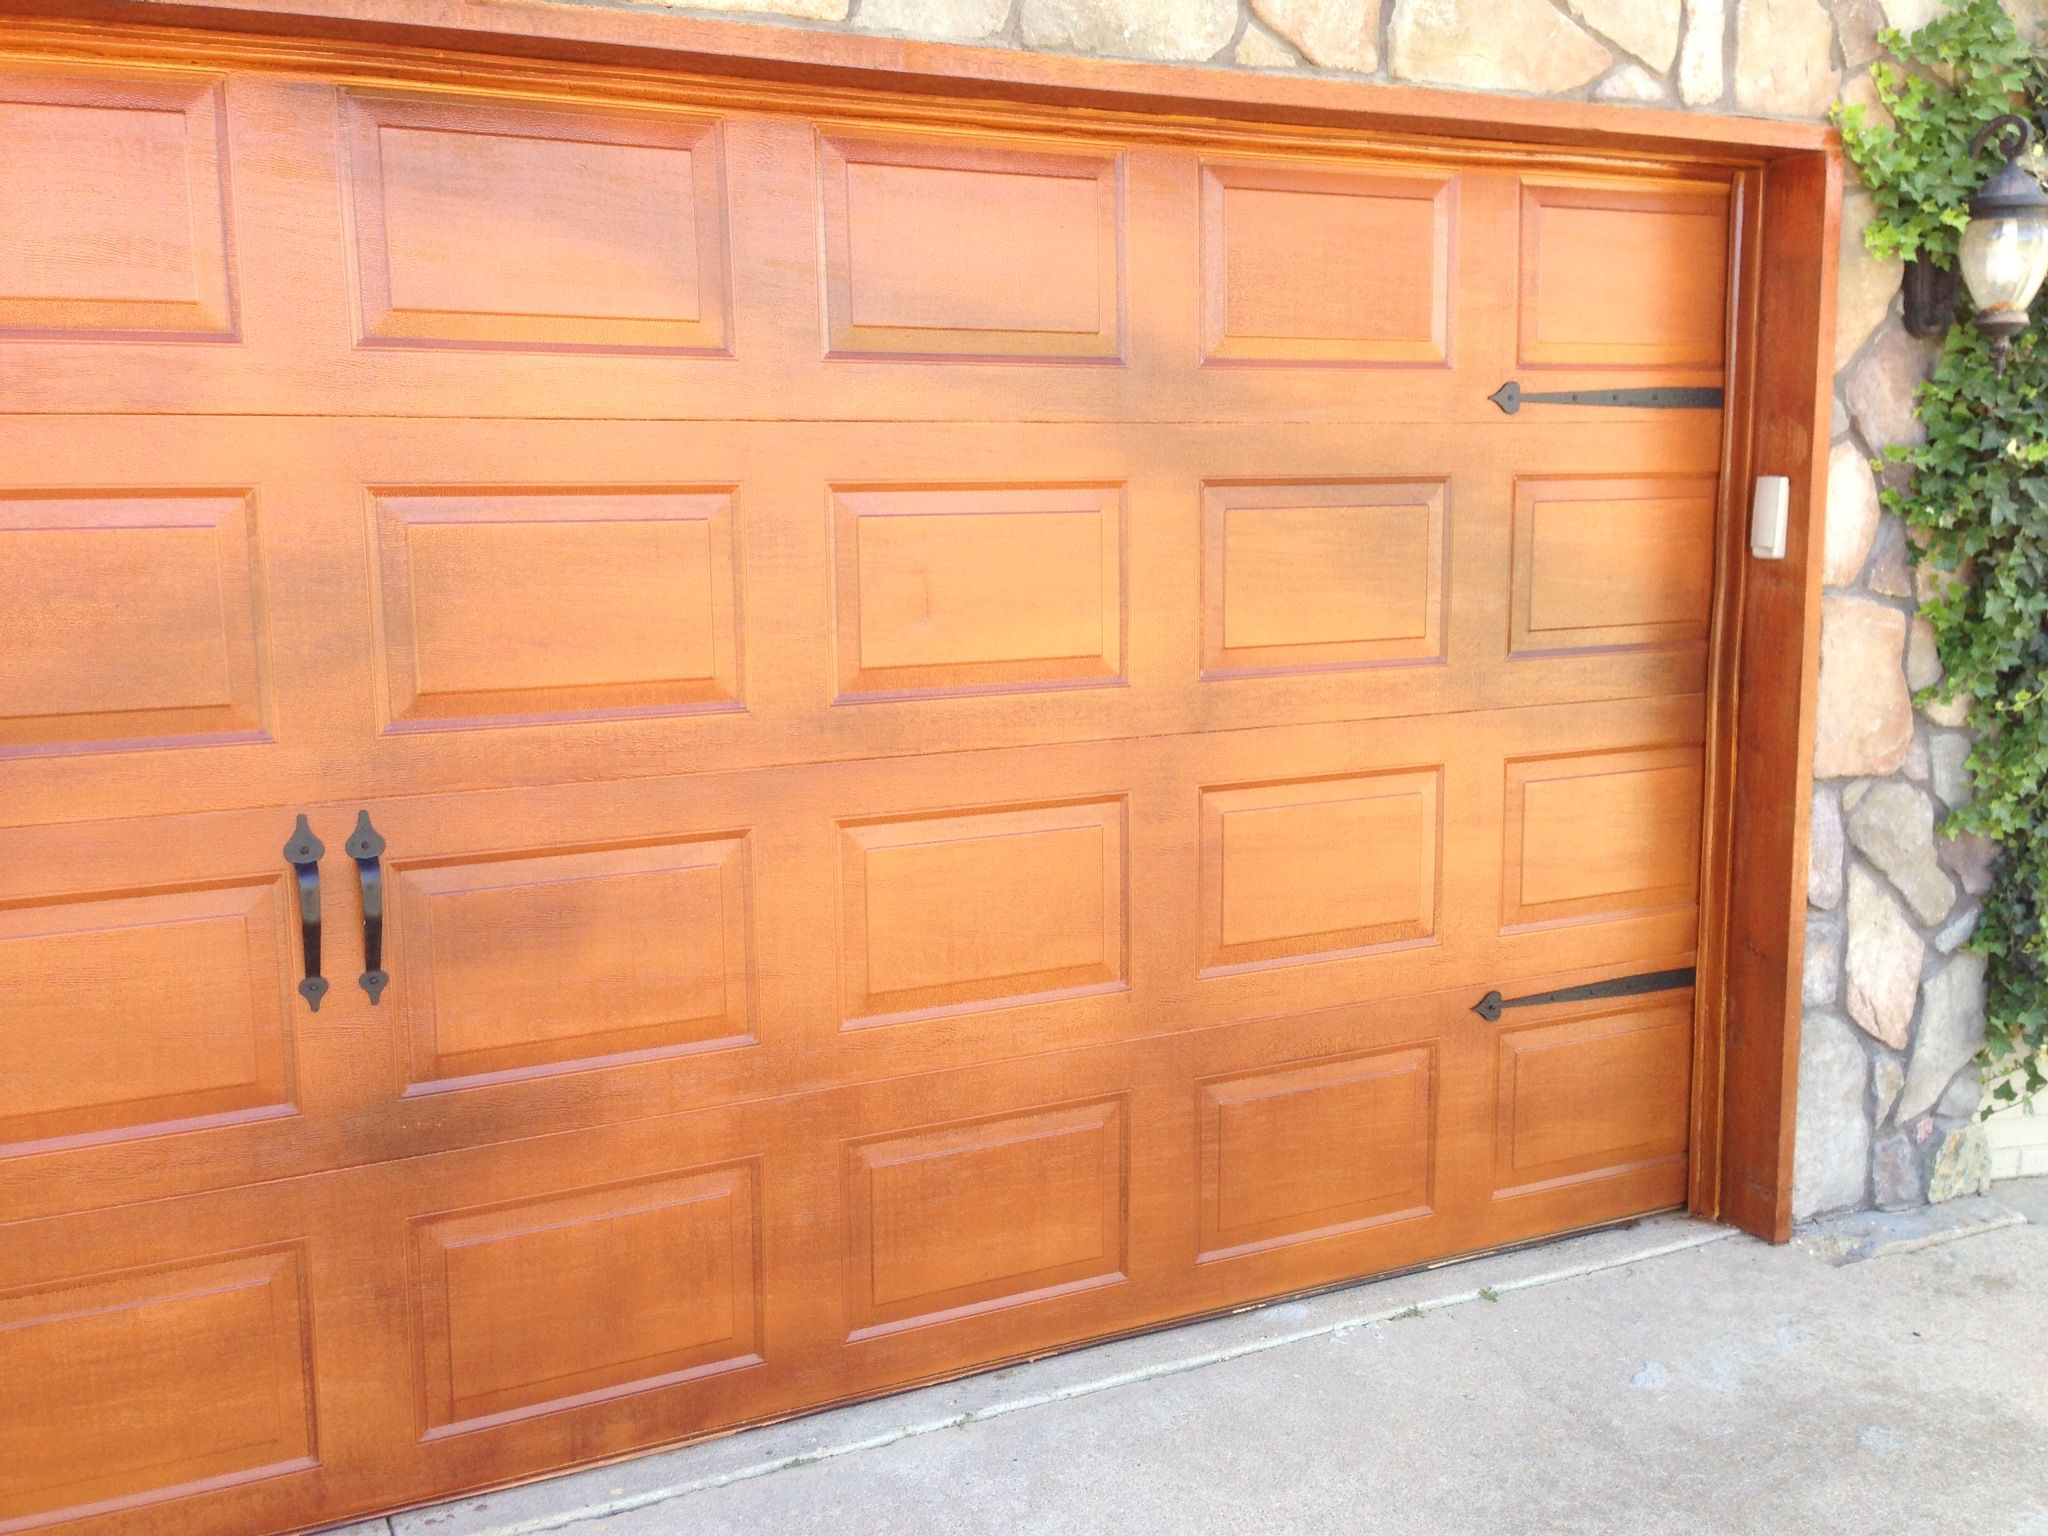 Garage Door Maintenance Tips that Are Worth Knowing